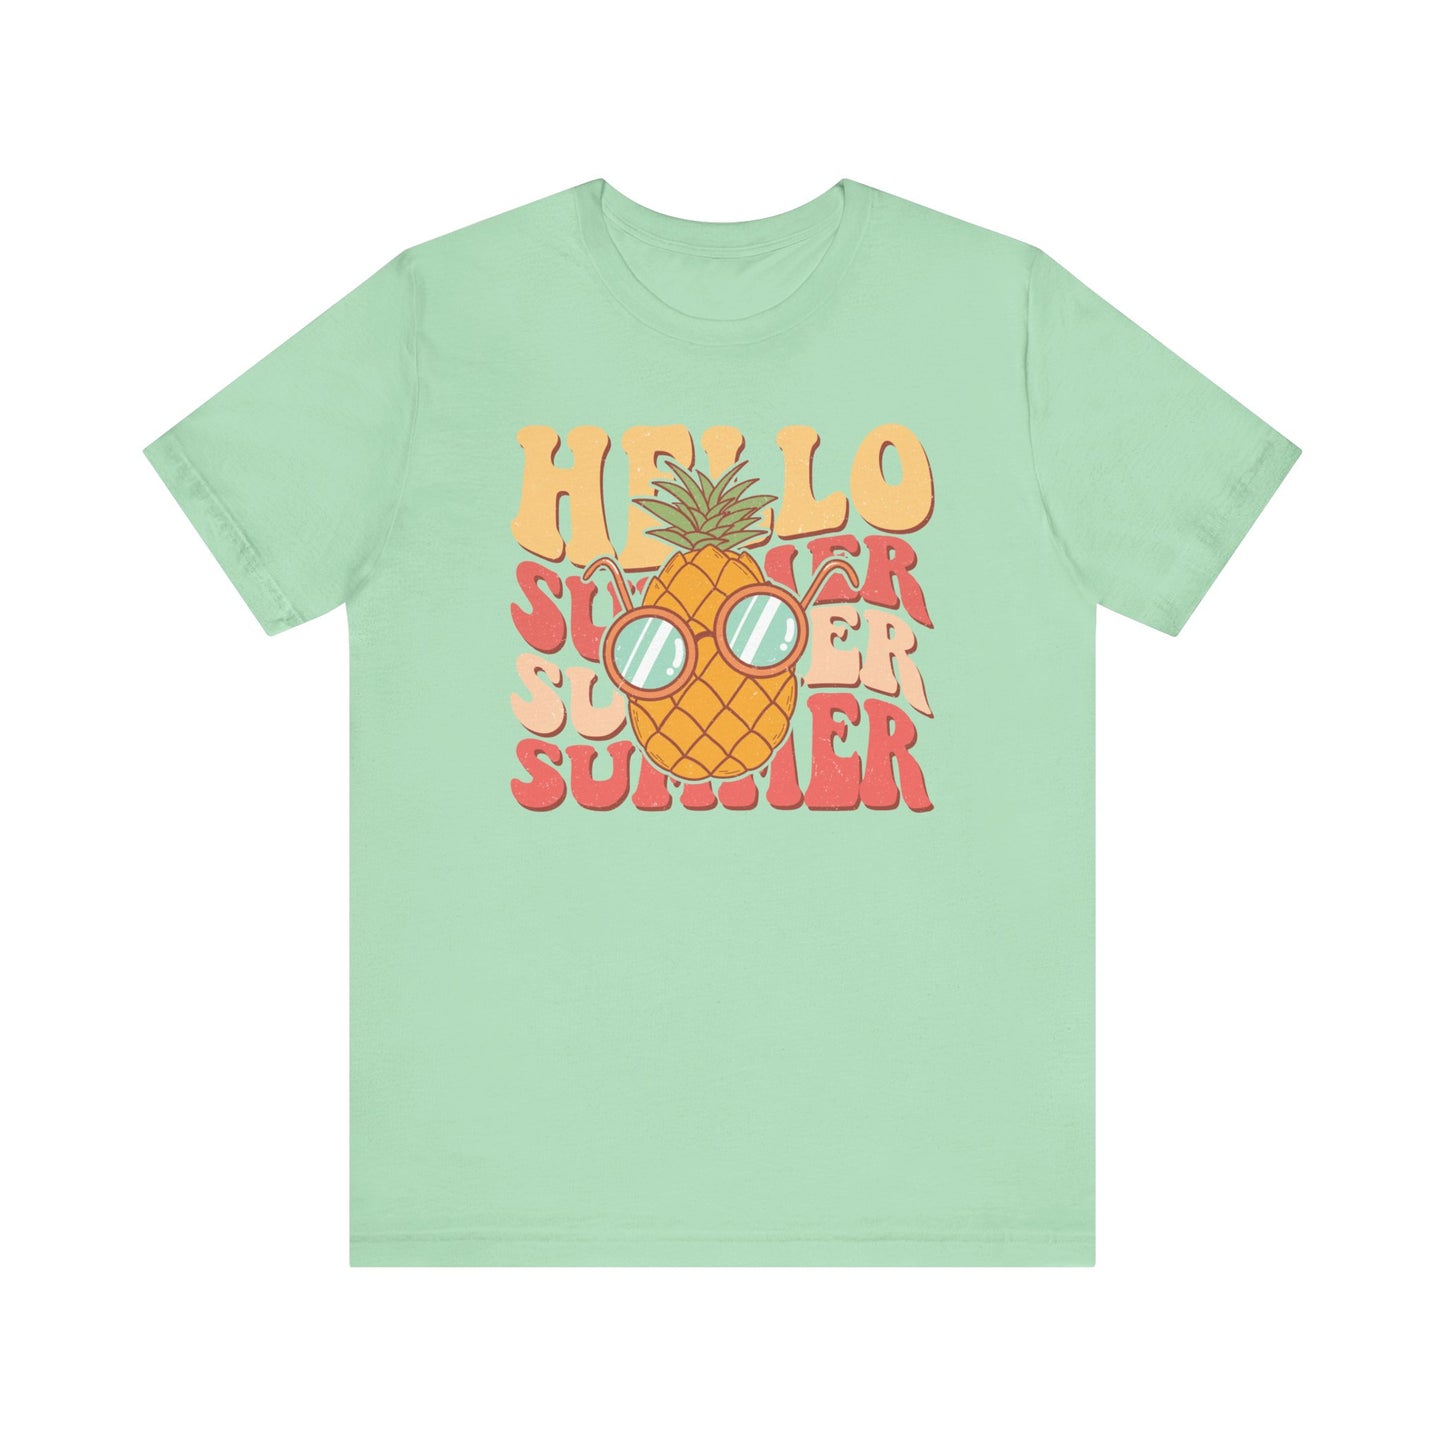 Vintage Hello Summer Pineapple T-Shirt, Retro Beach Vibes Graphic Tee, Unisex Casual Shirt